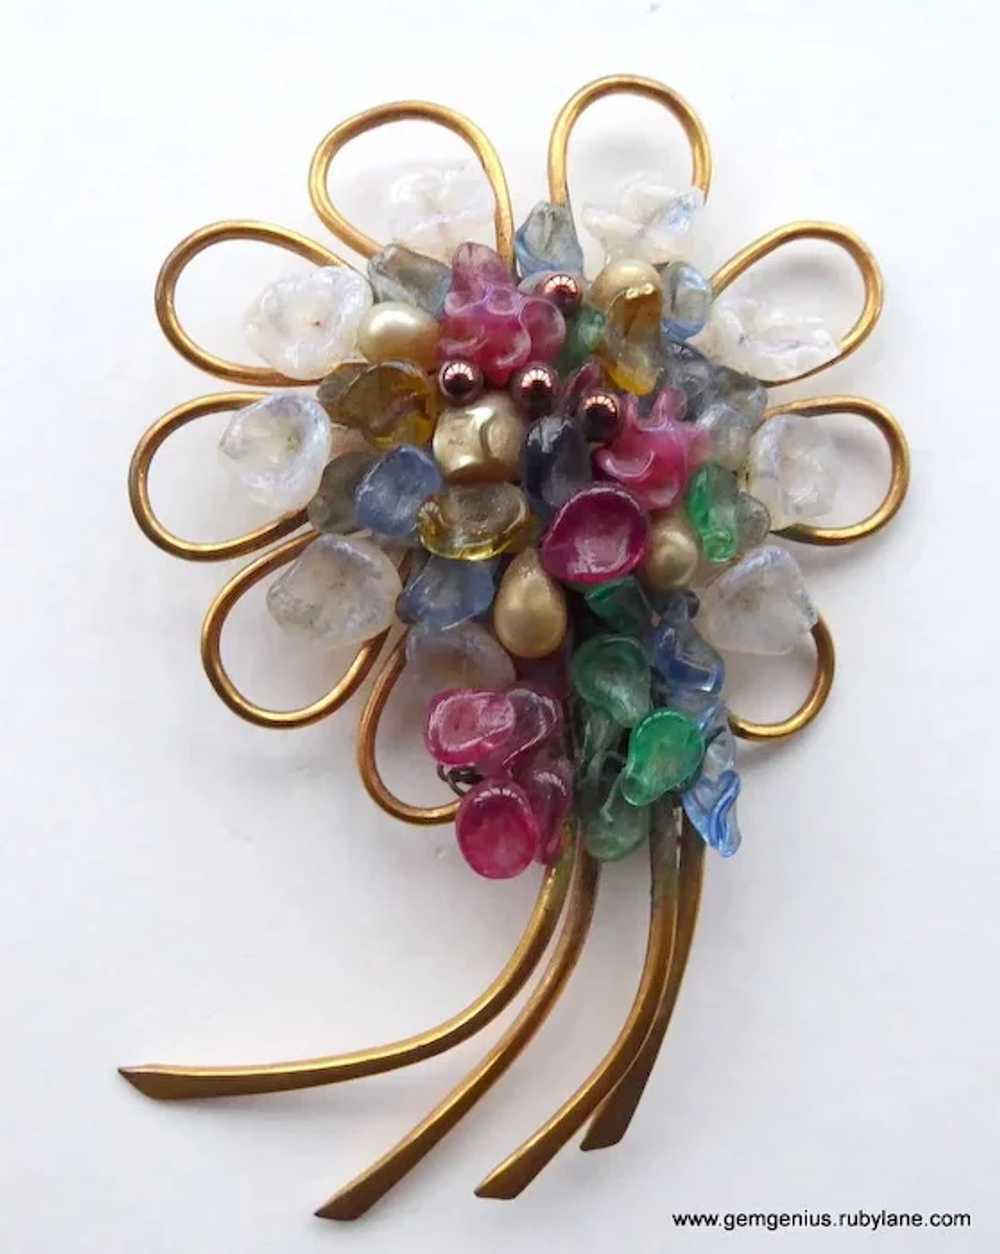 Vintage Handmade Necklace by Louis Rousselet Paris 1950s Silver Rose Faux Pearls